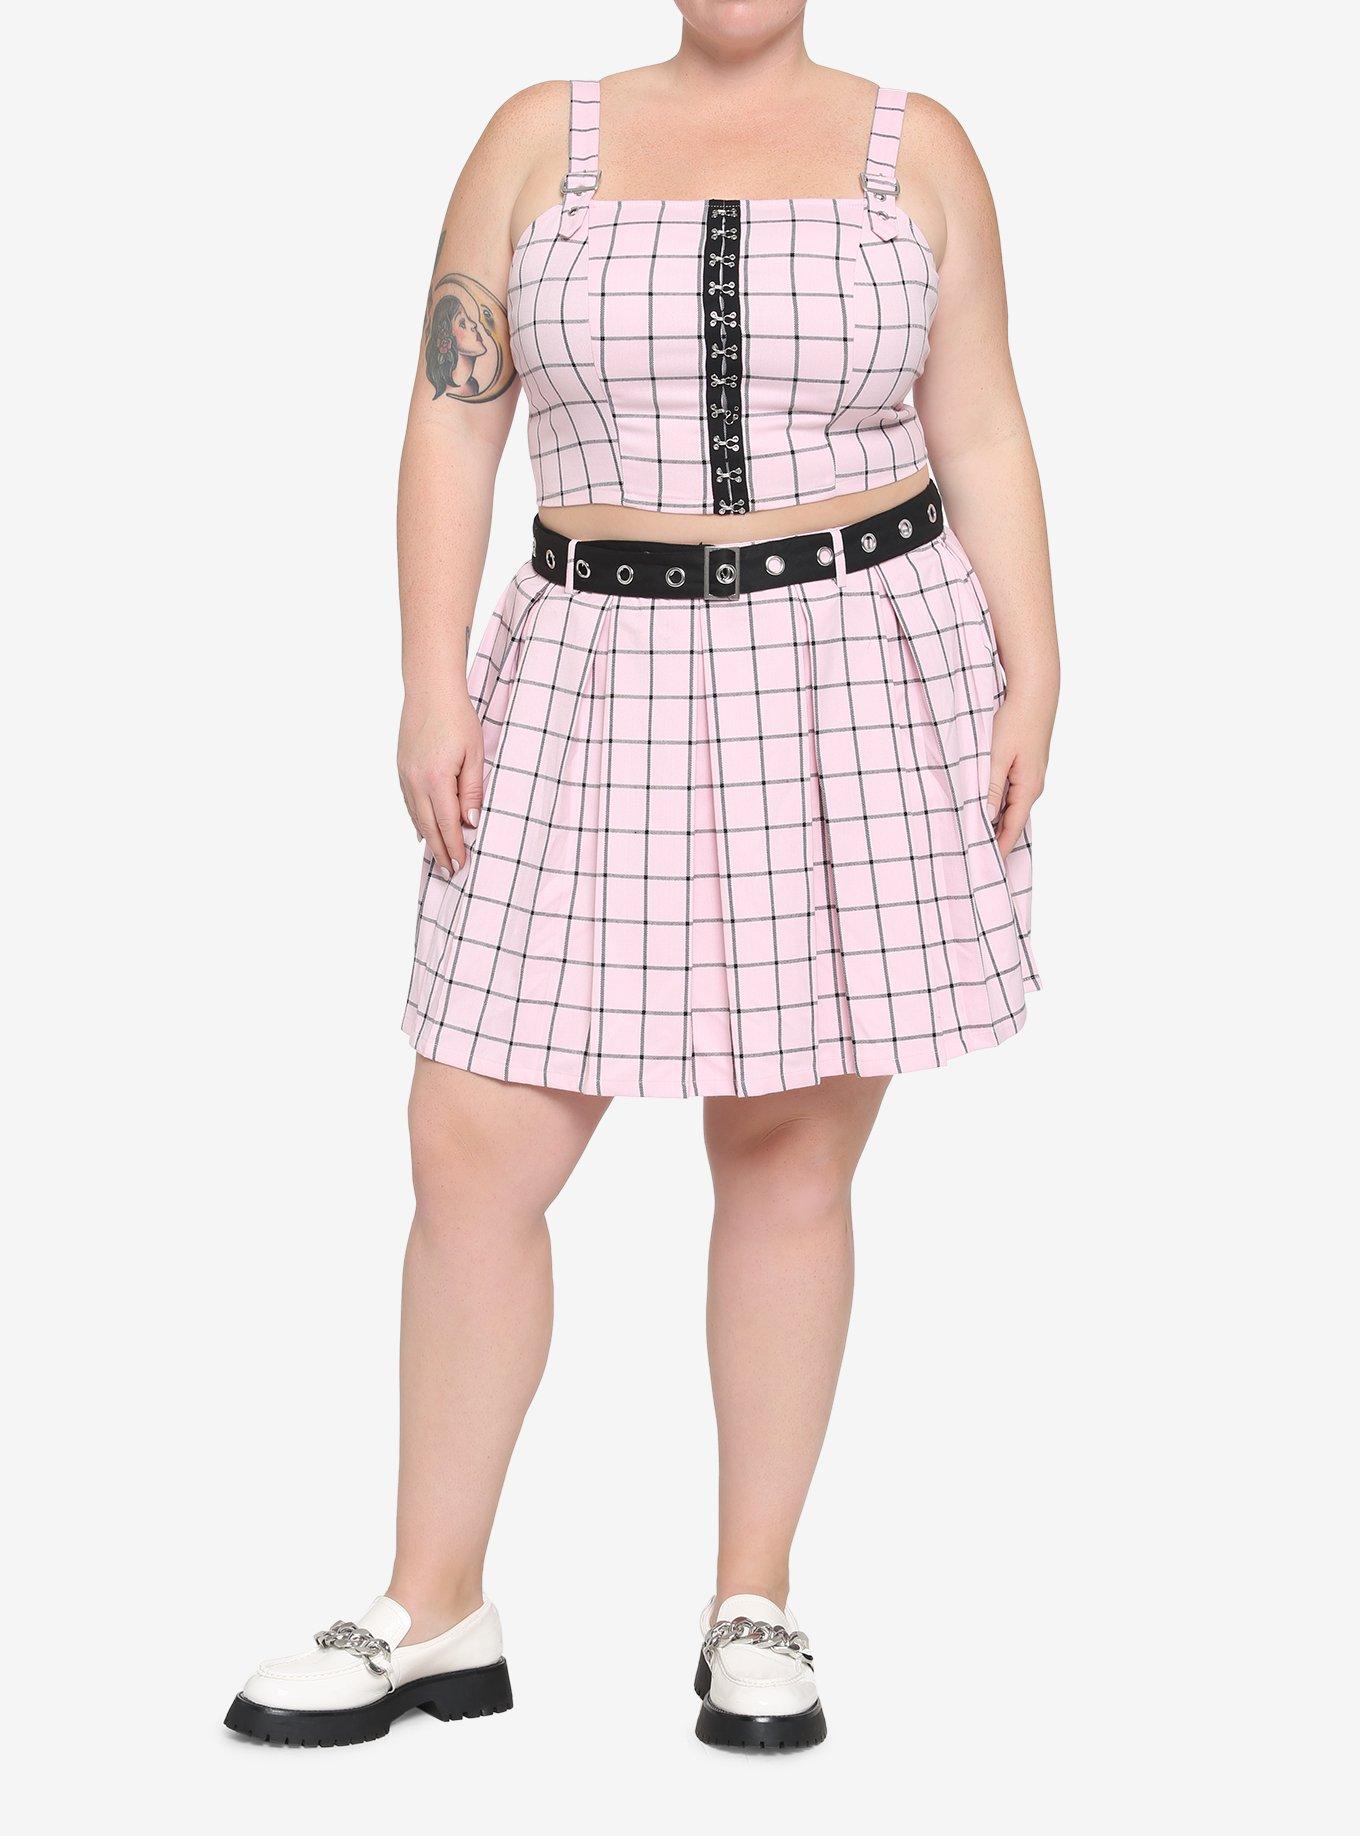 Pink & Black Grid Buckle Girls Tank Top Plus Size, PLAID - PINK, alternate